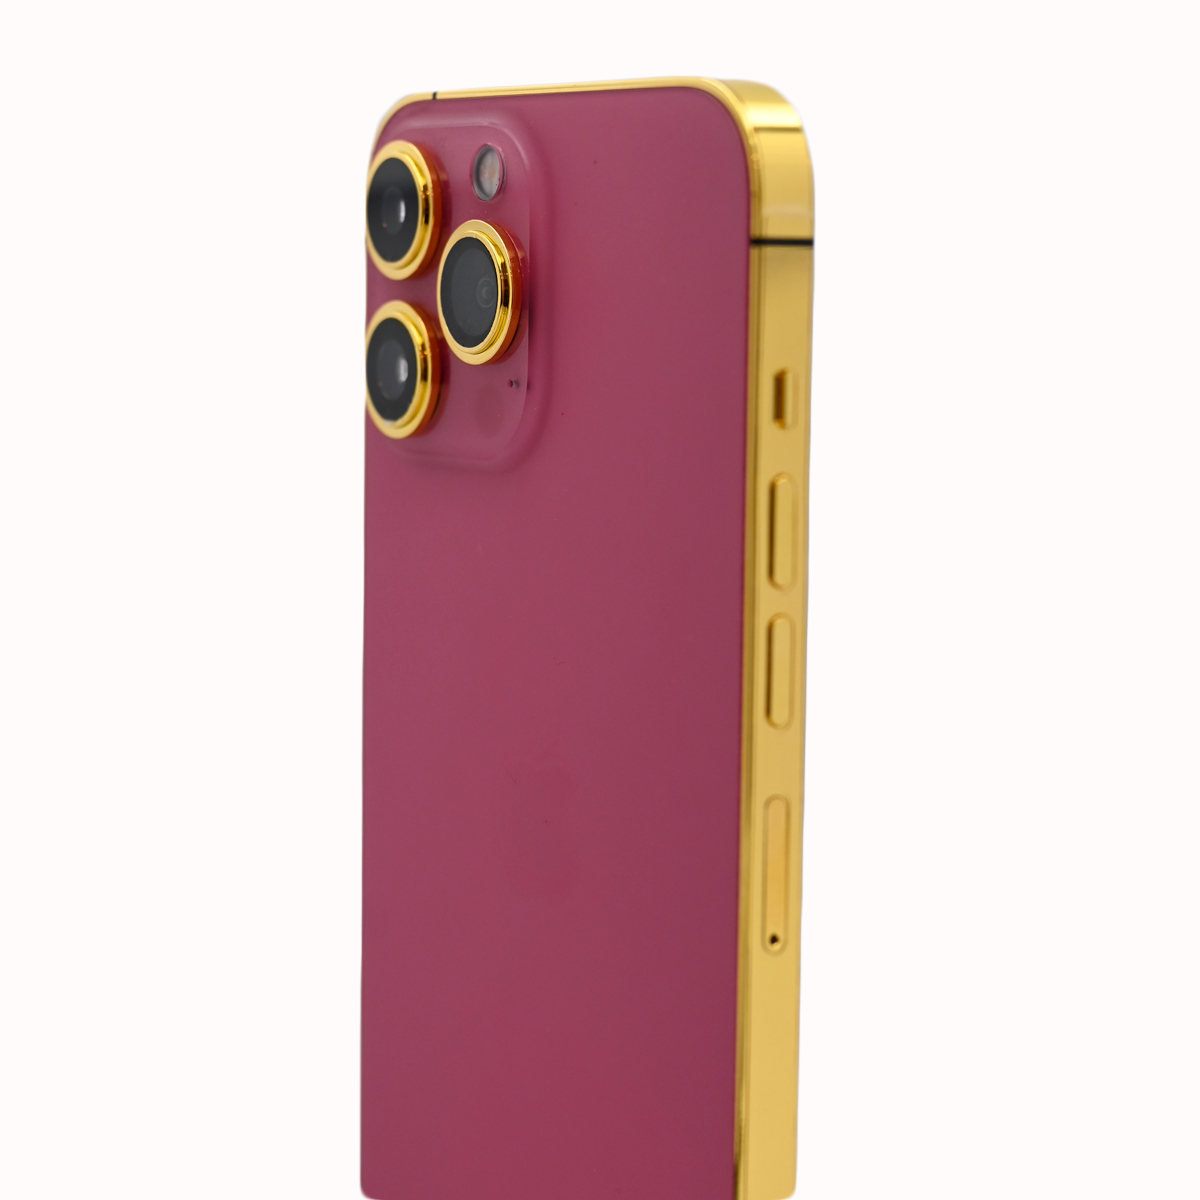 Caviar Luxury 24k Gold Frame Customized iPhone 13 Pro Max 128 GB - Pink